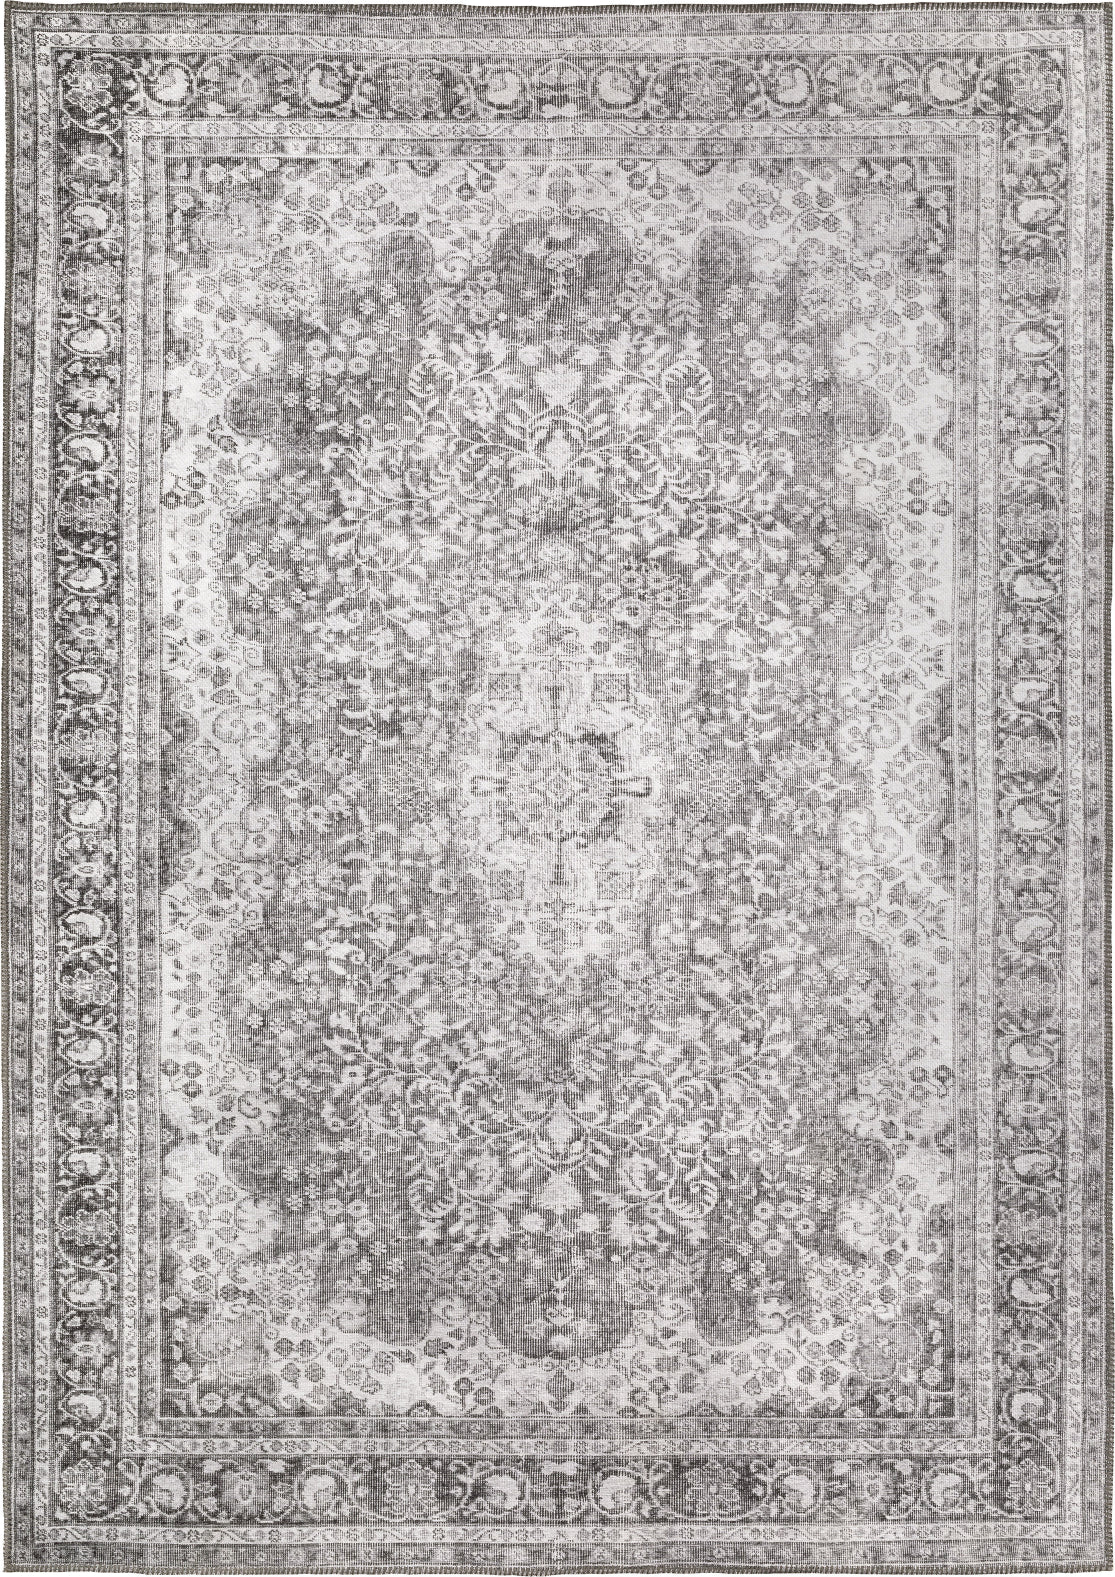 Oriental Weavers Sofia 85821 Charcoal/ Grey Area Rug Main Image Featured